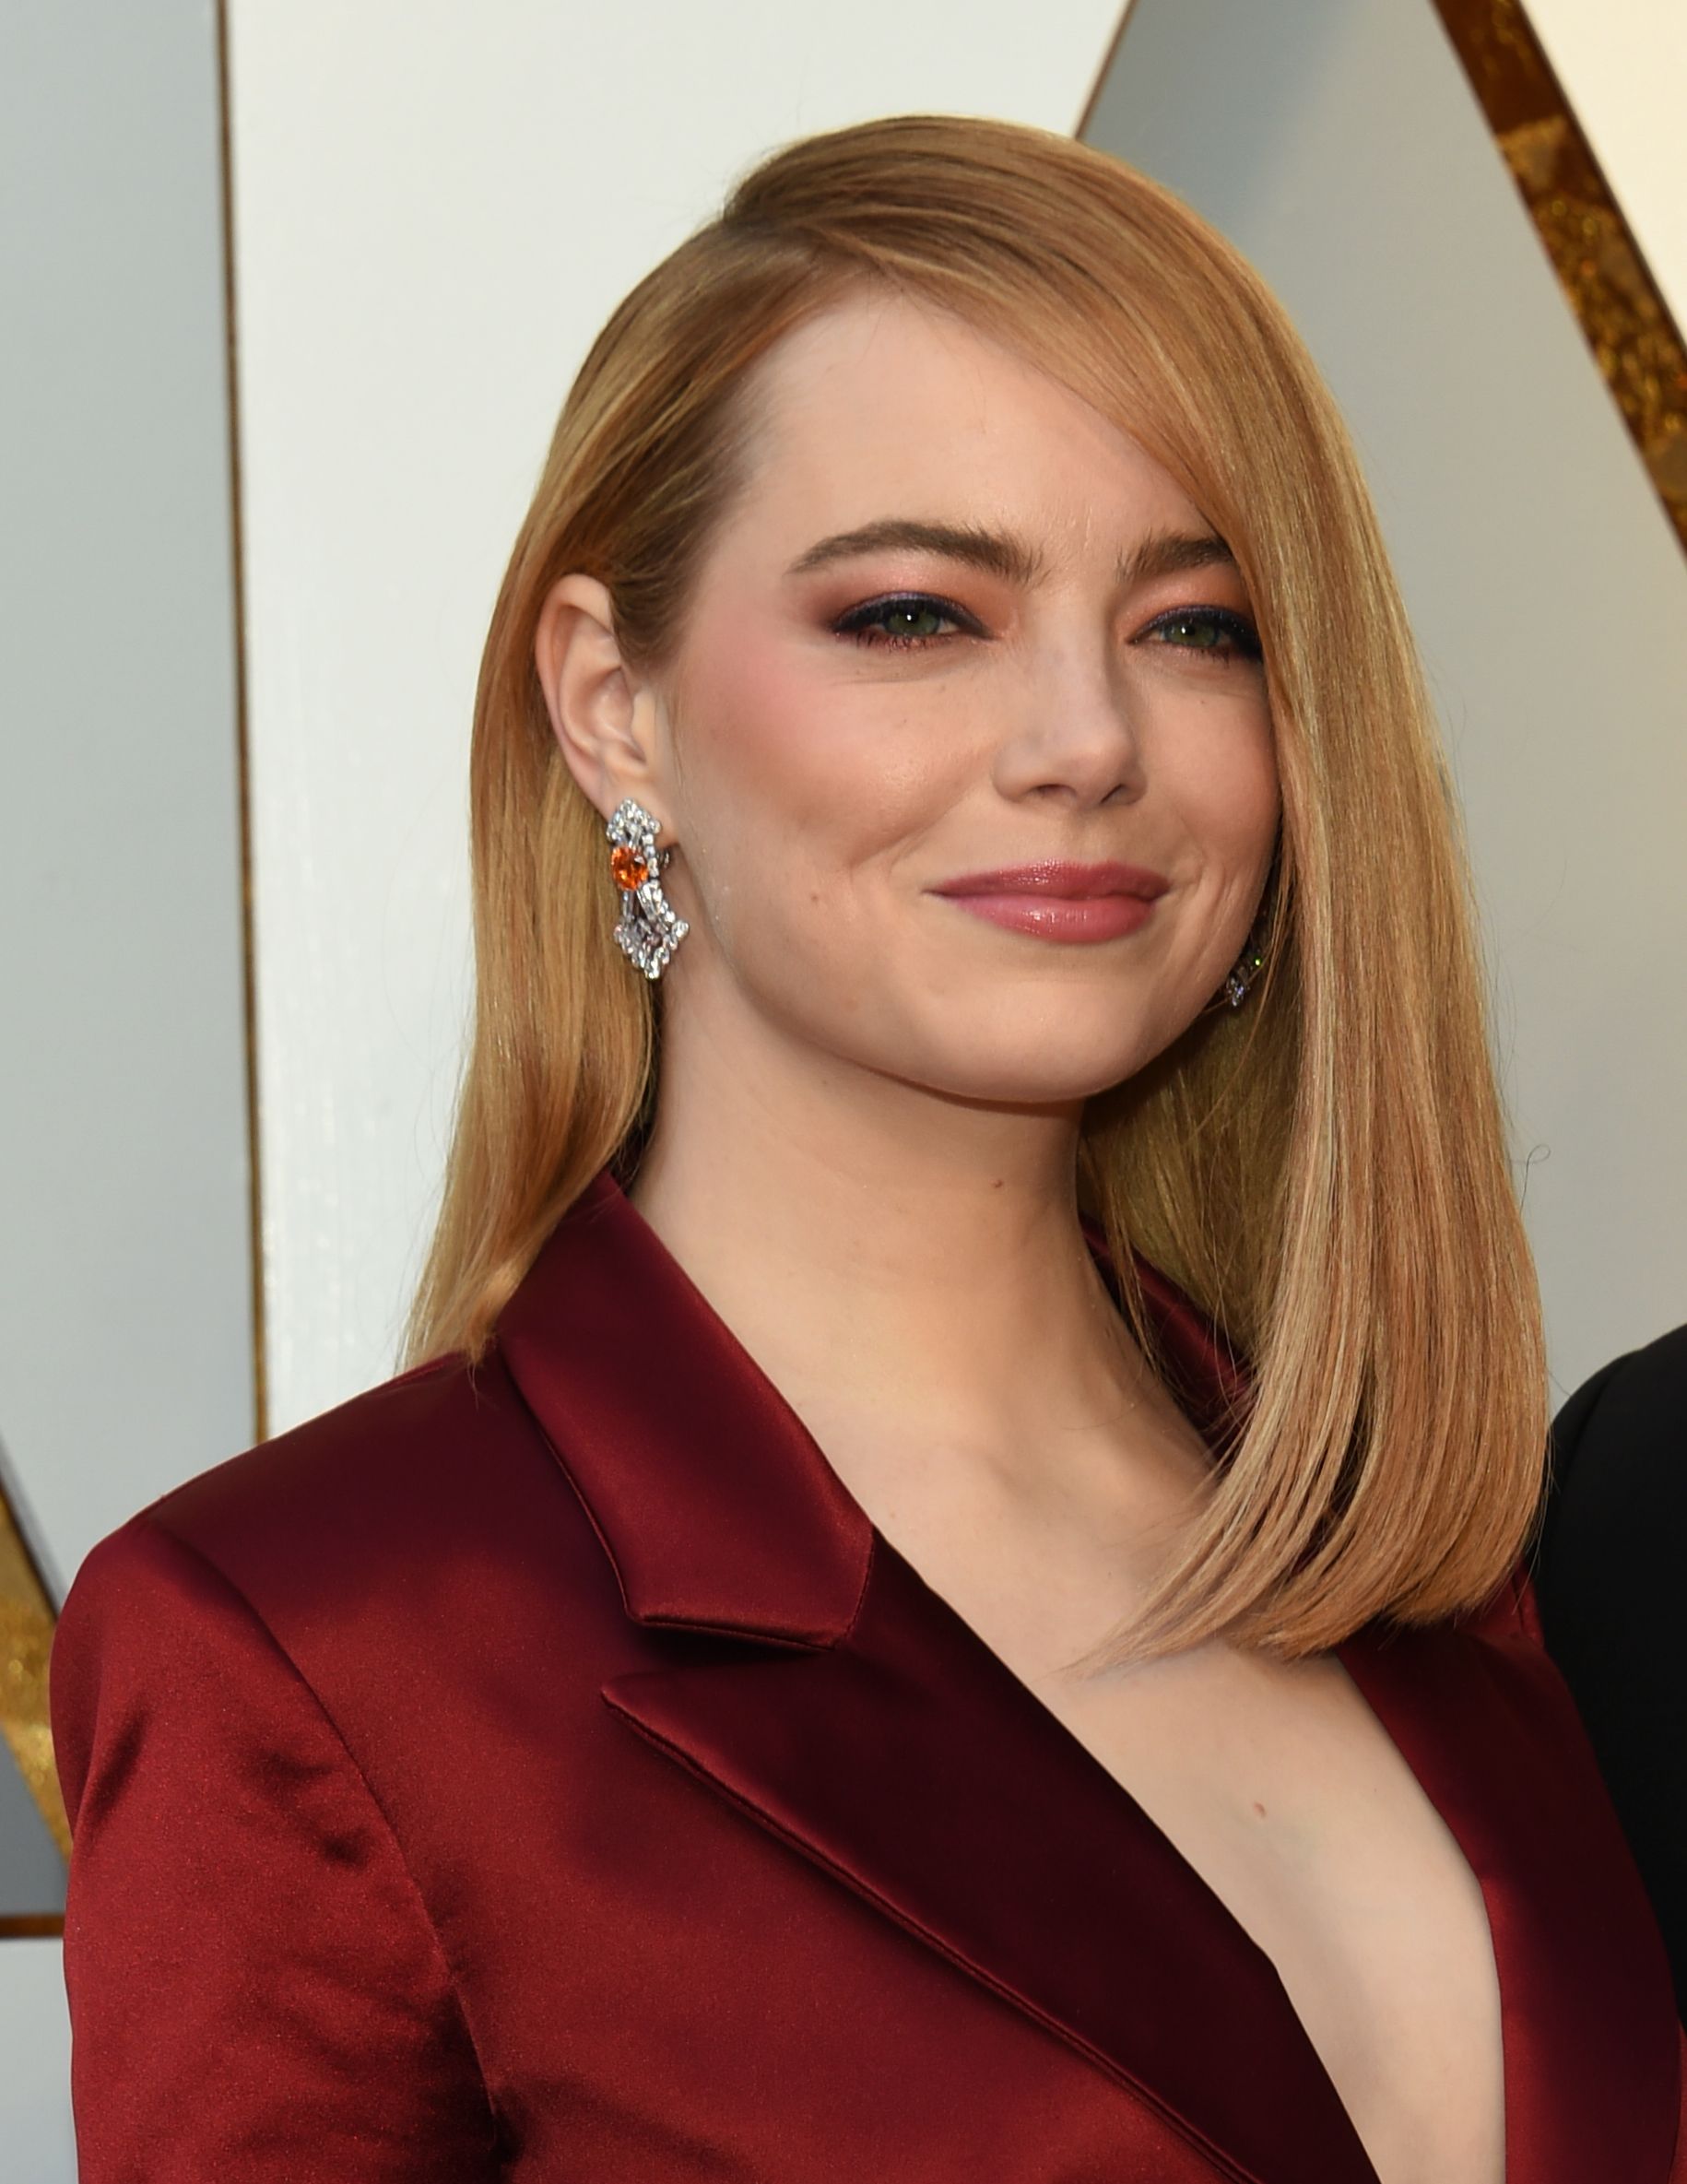 Emma Stone Louis Vuitton Trouser Suit at the Oscars 2018